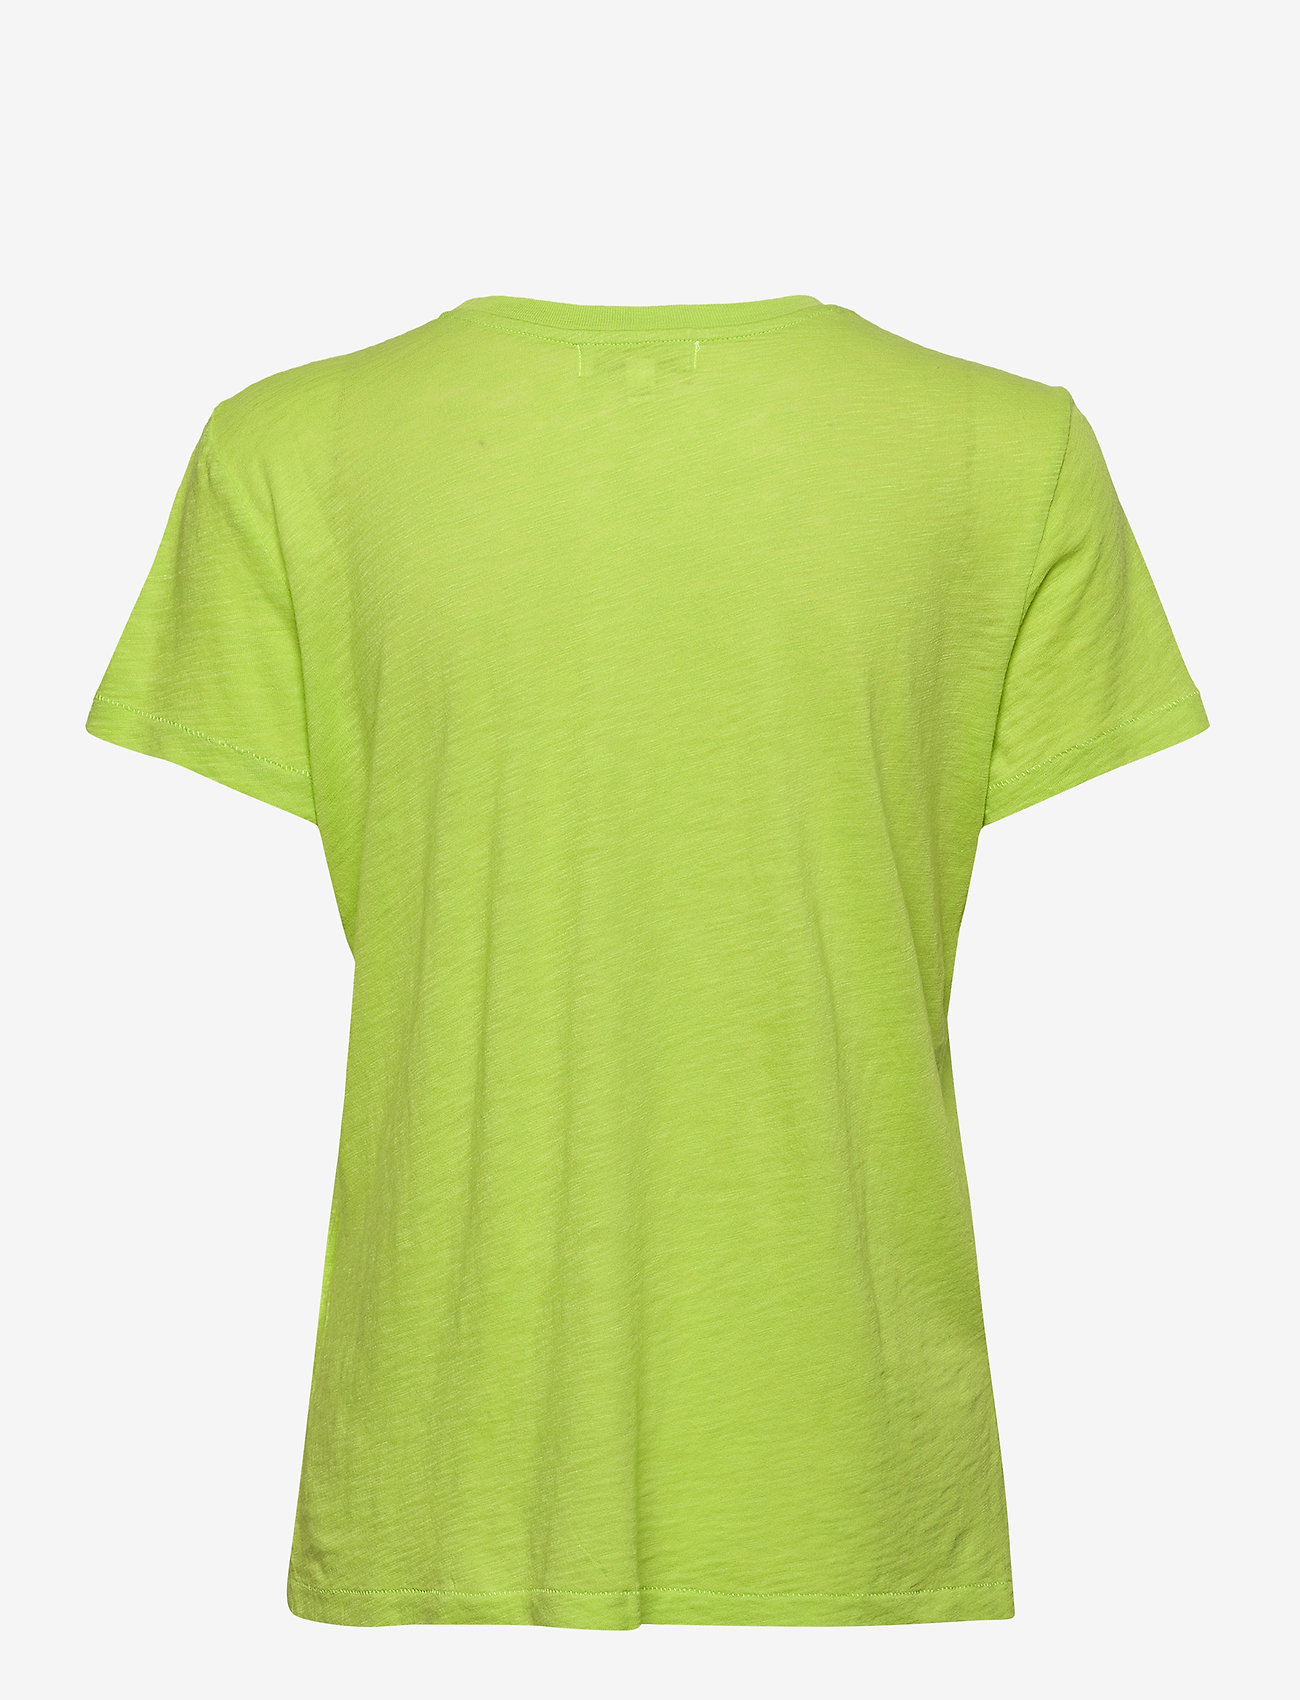 PJ Salvage - s/s shirt - oberteile - lime green - 1